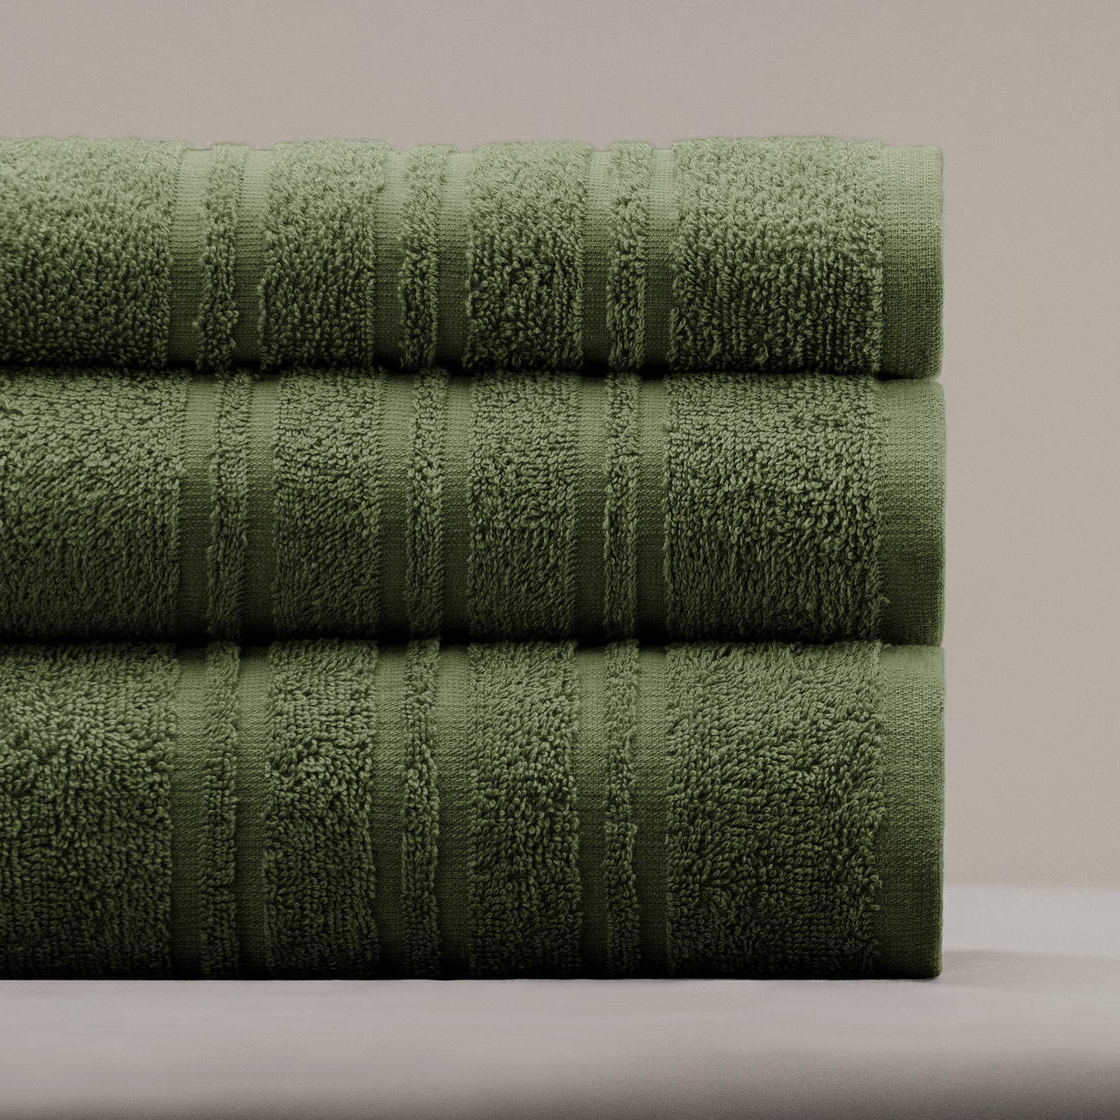 Махровое полотенце Sofi De Marko Monica зелёное 70х140 см полотенце sofi de marko oscar 140x70 см пол ос 70х140бж